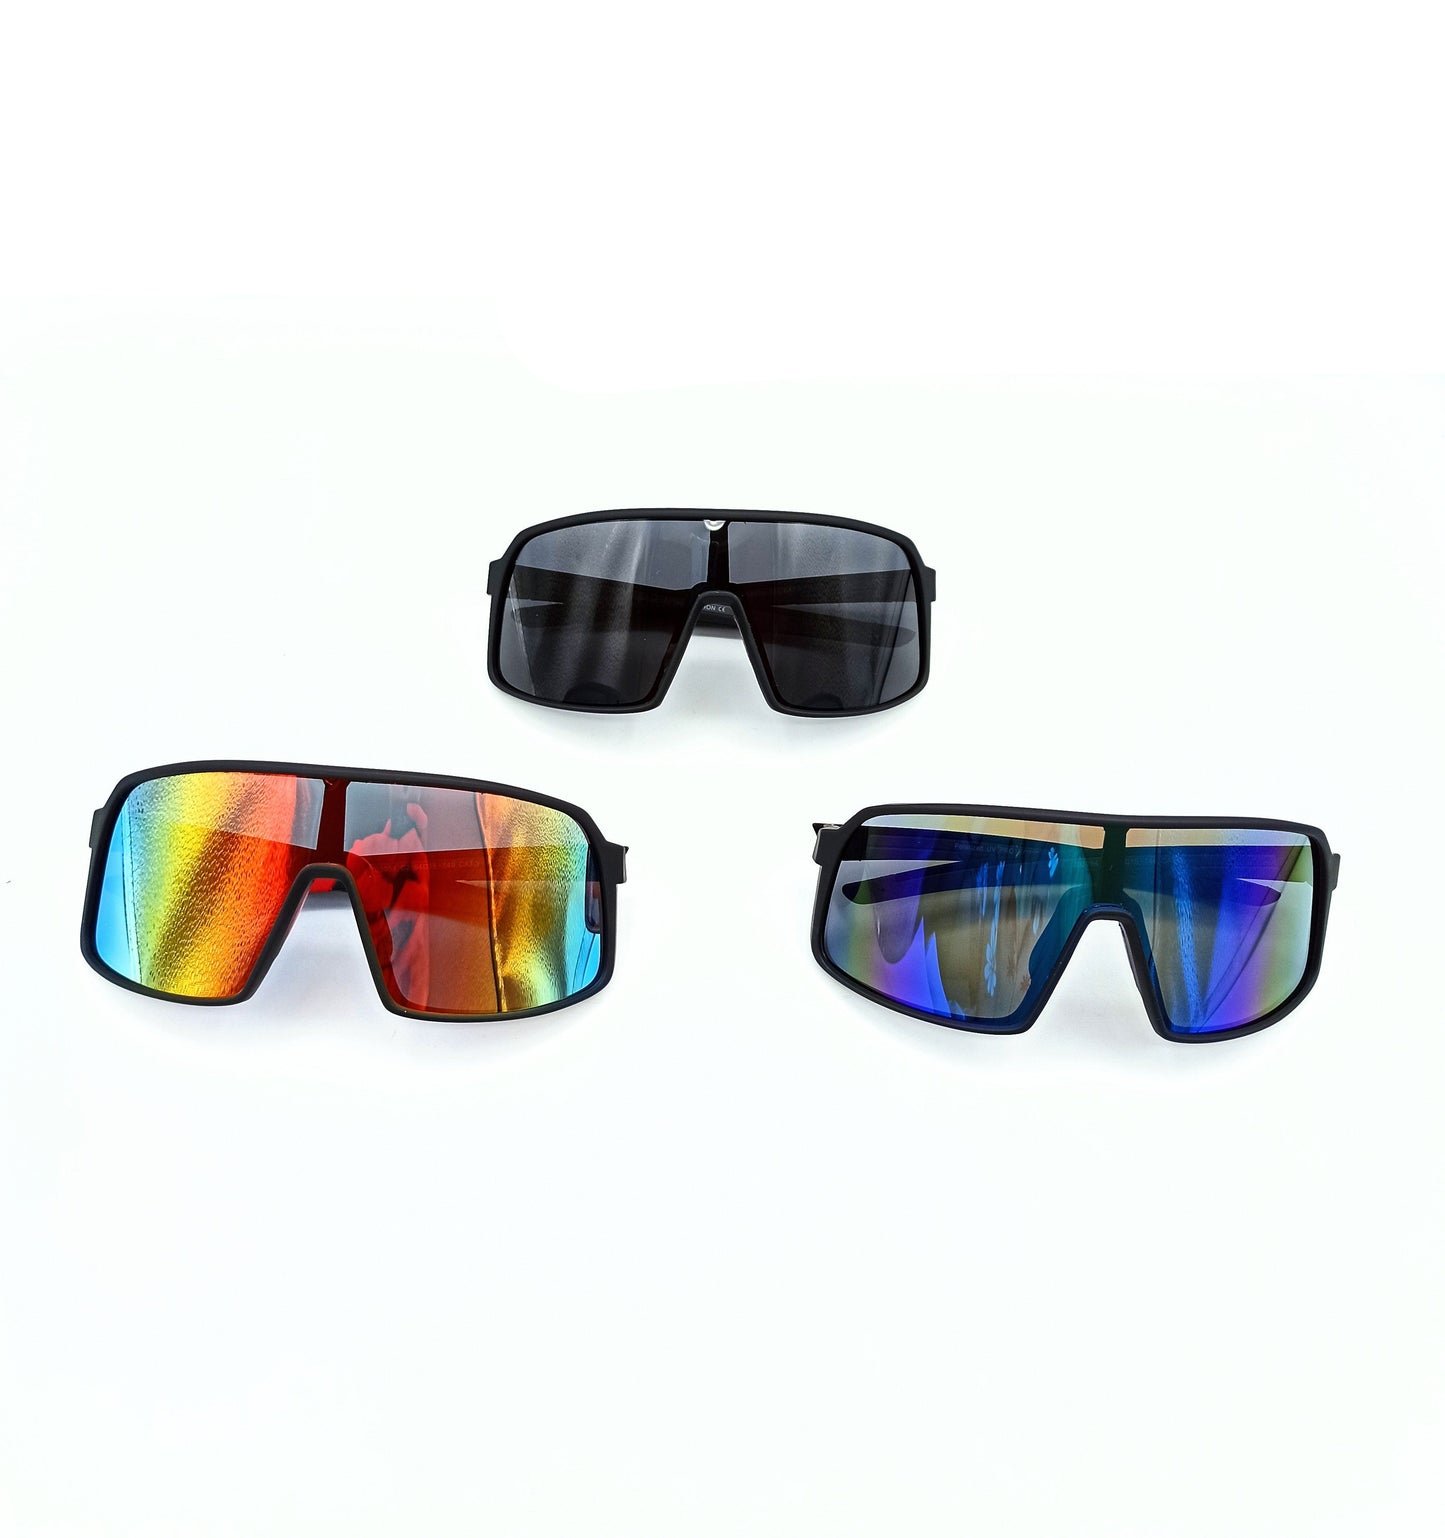 Qoolst Lambert Polarized Sunglasses for Men and Women